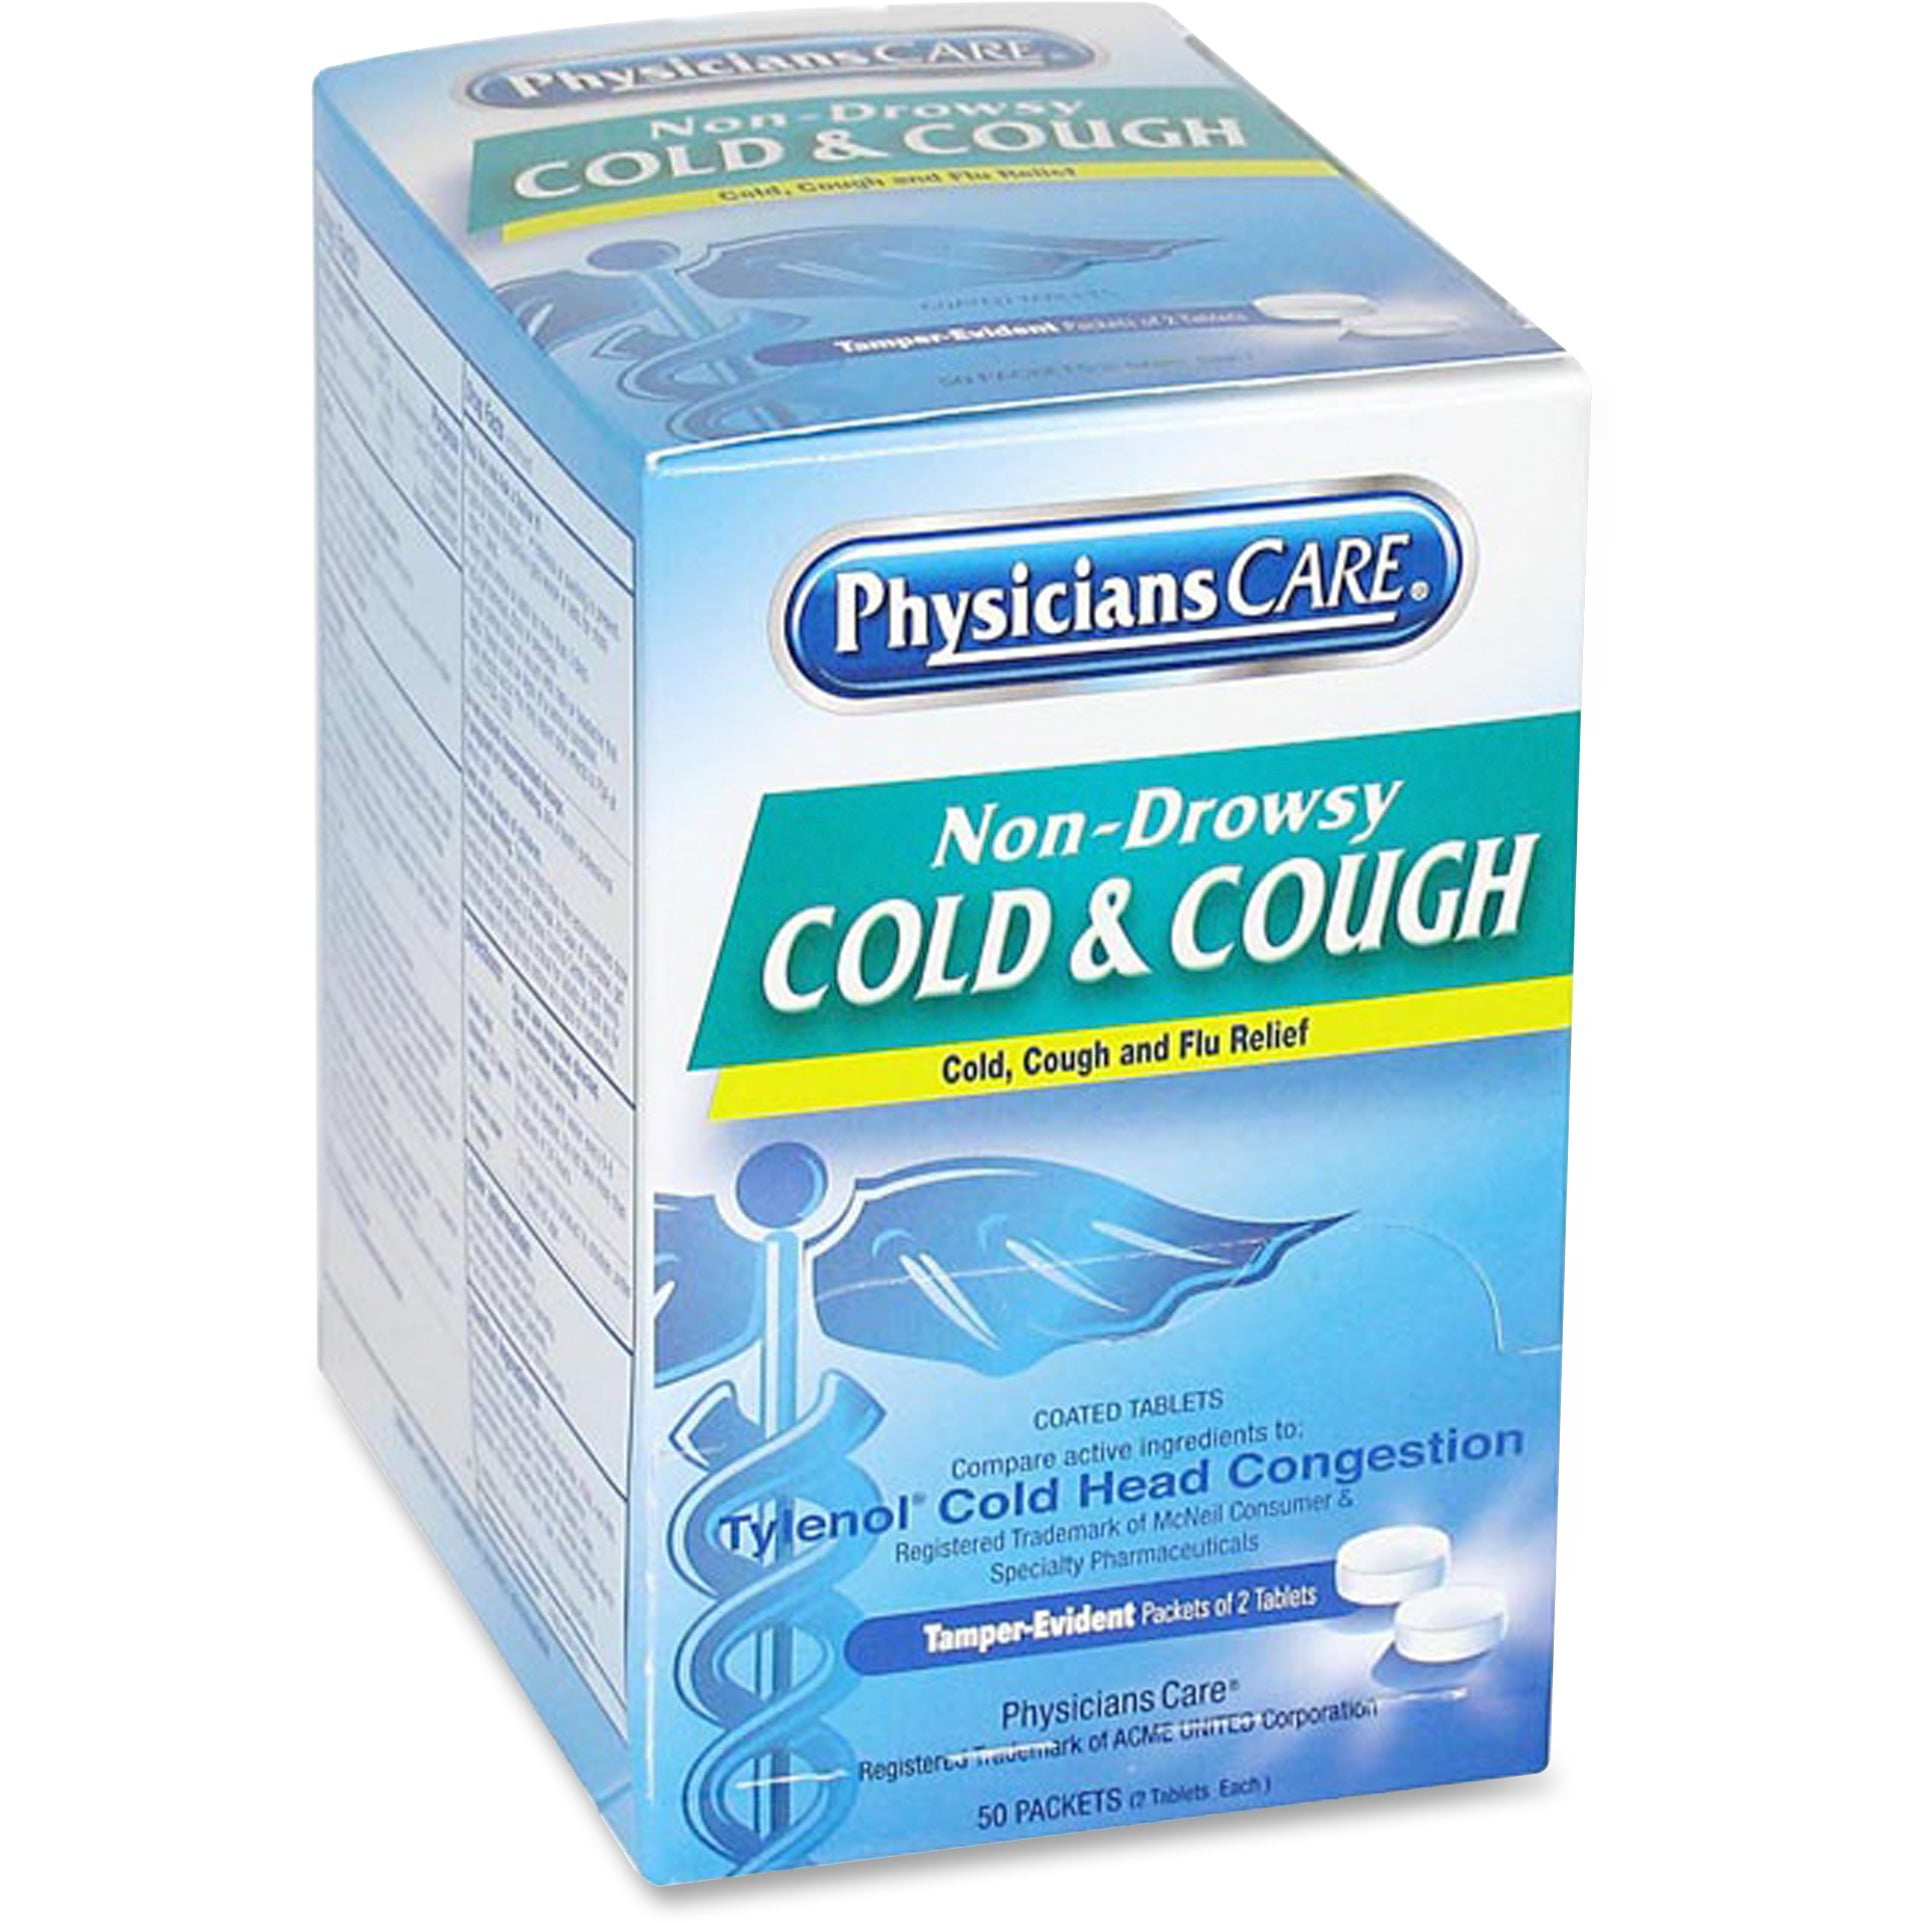 Cough cold